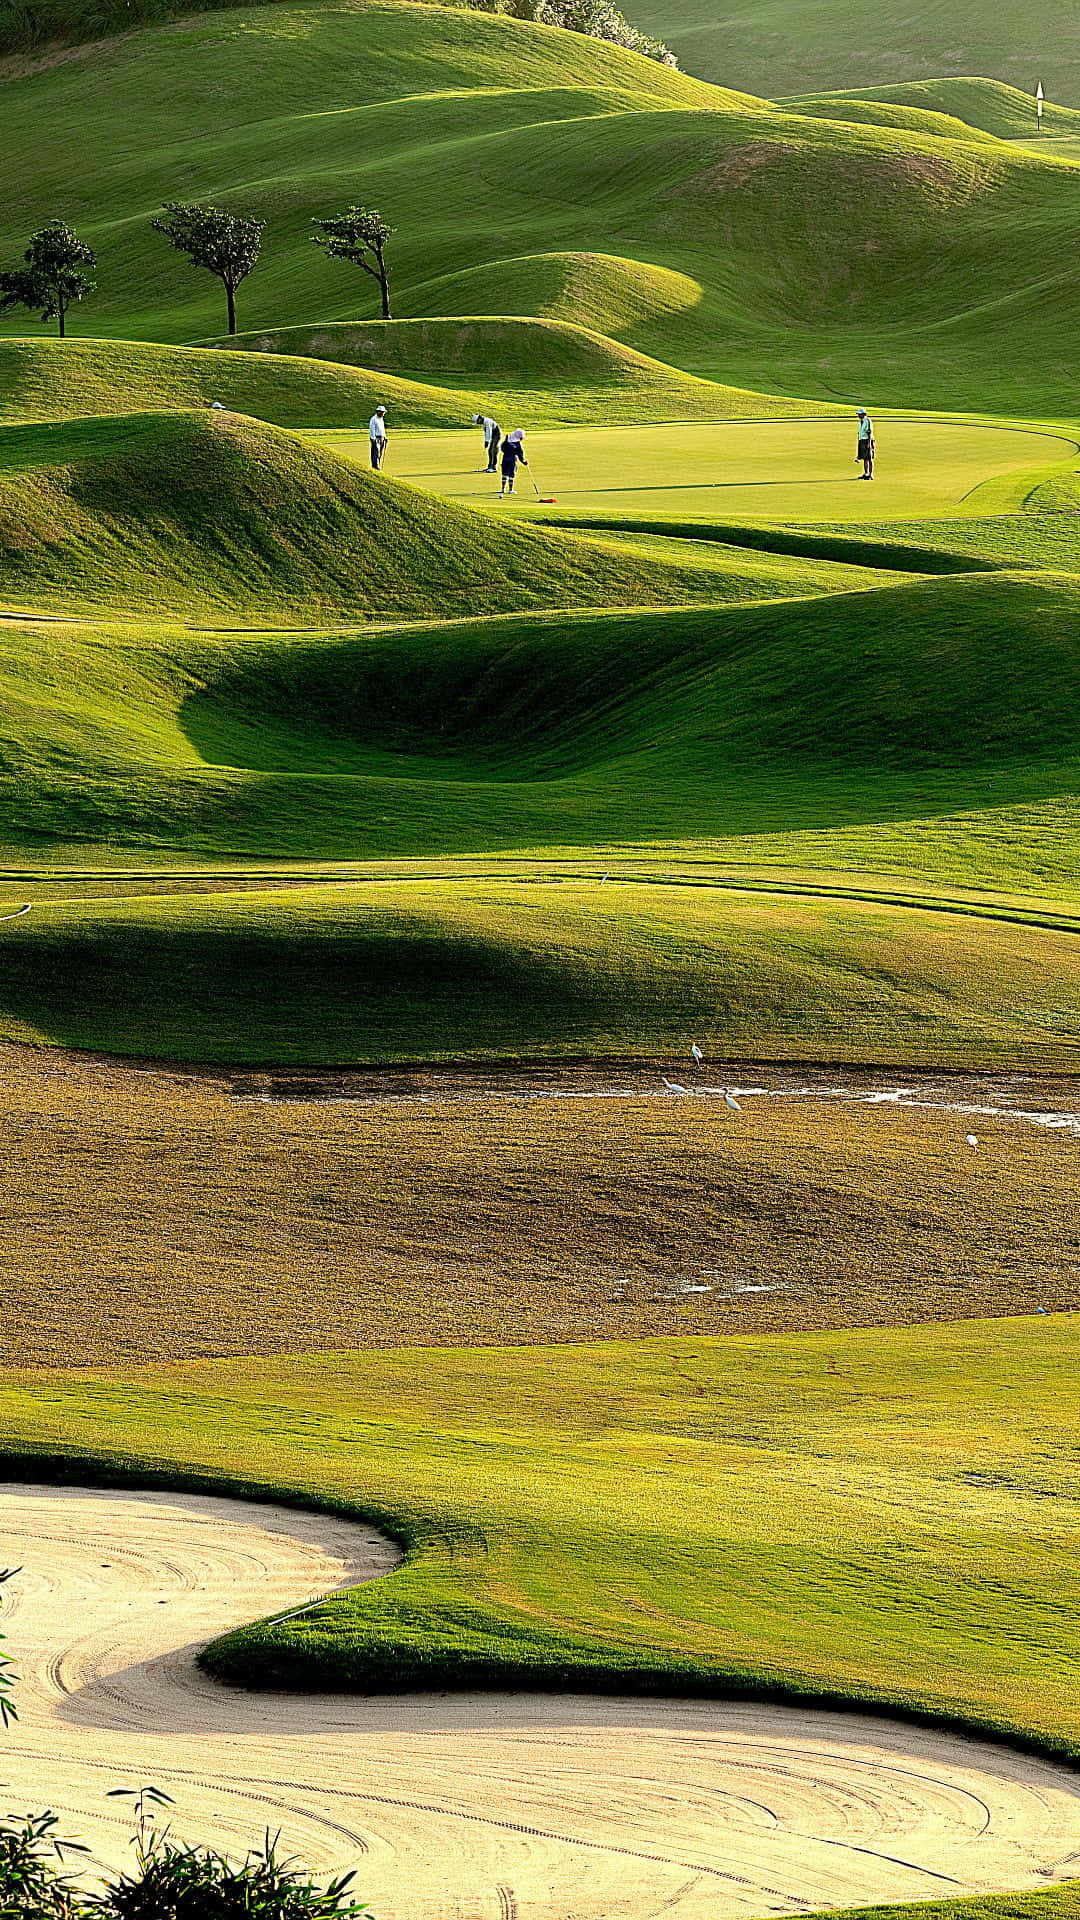 Serene Golf Course At Dusk